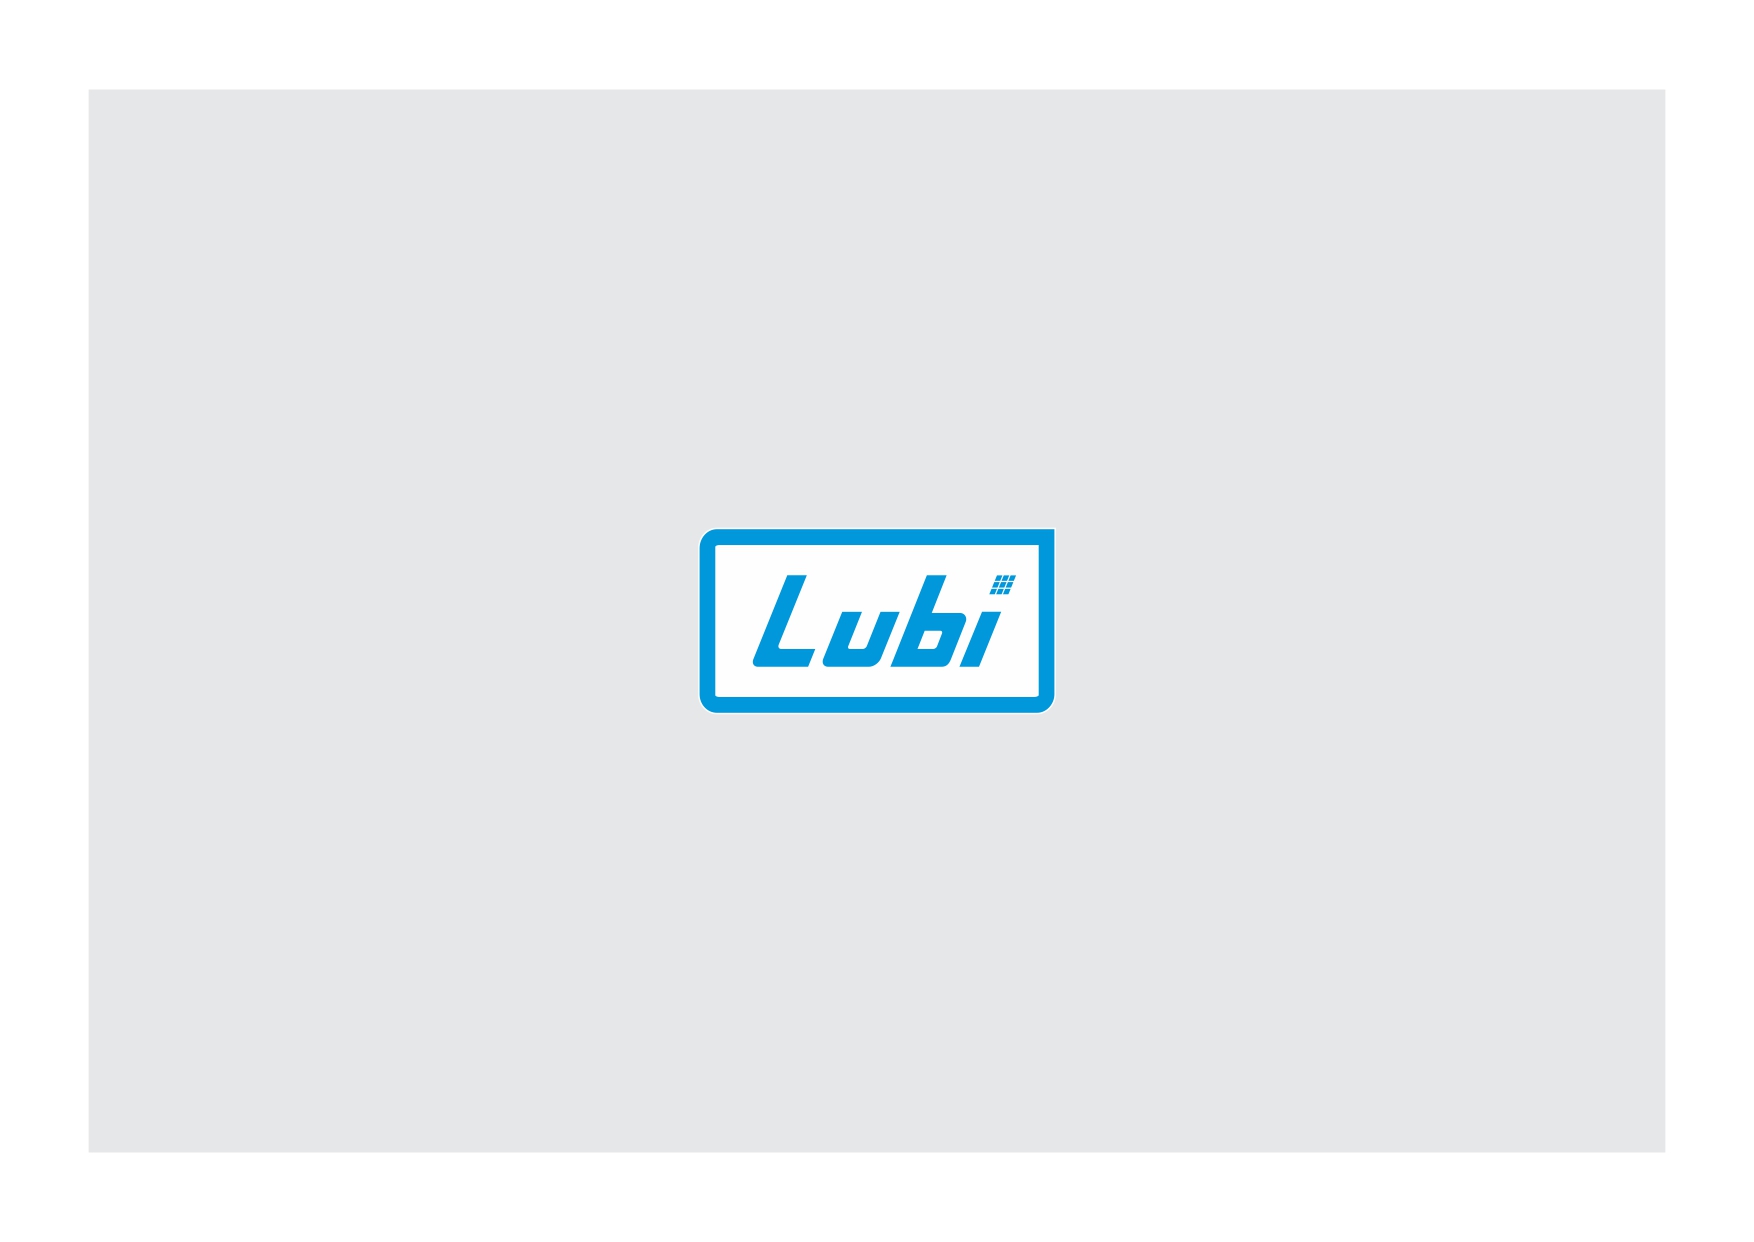 Lubi Pumps - Sunrise Efficient Marketing Ltd